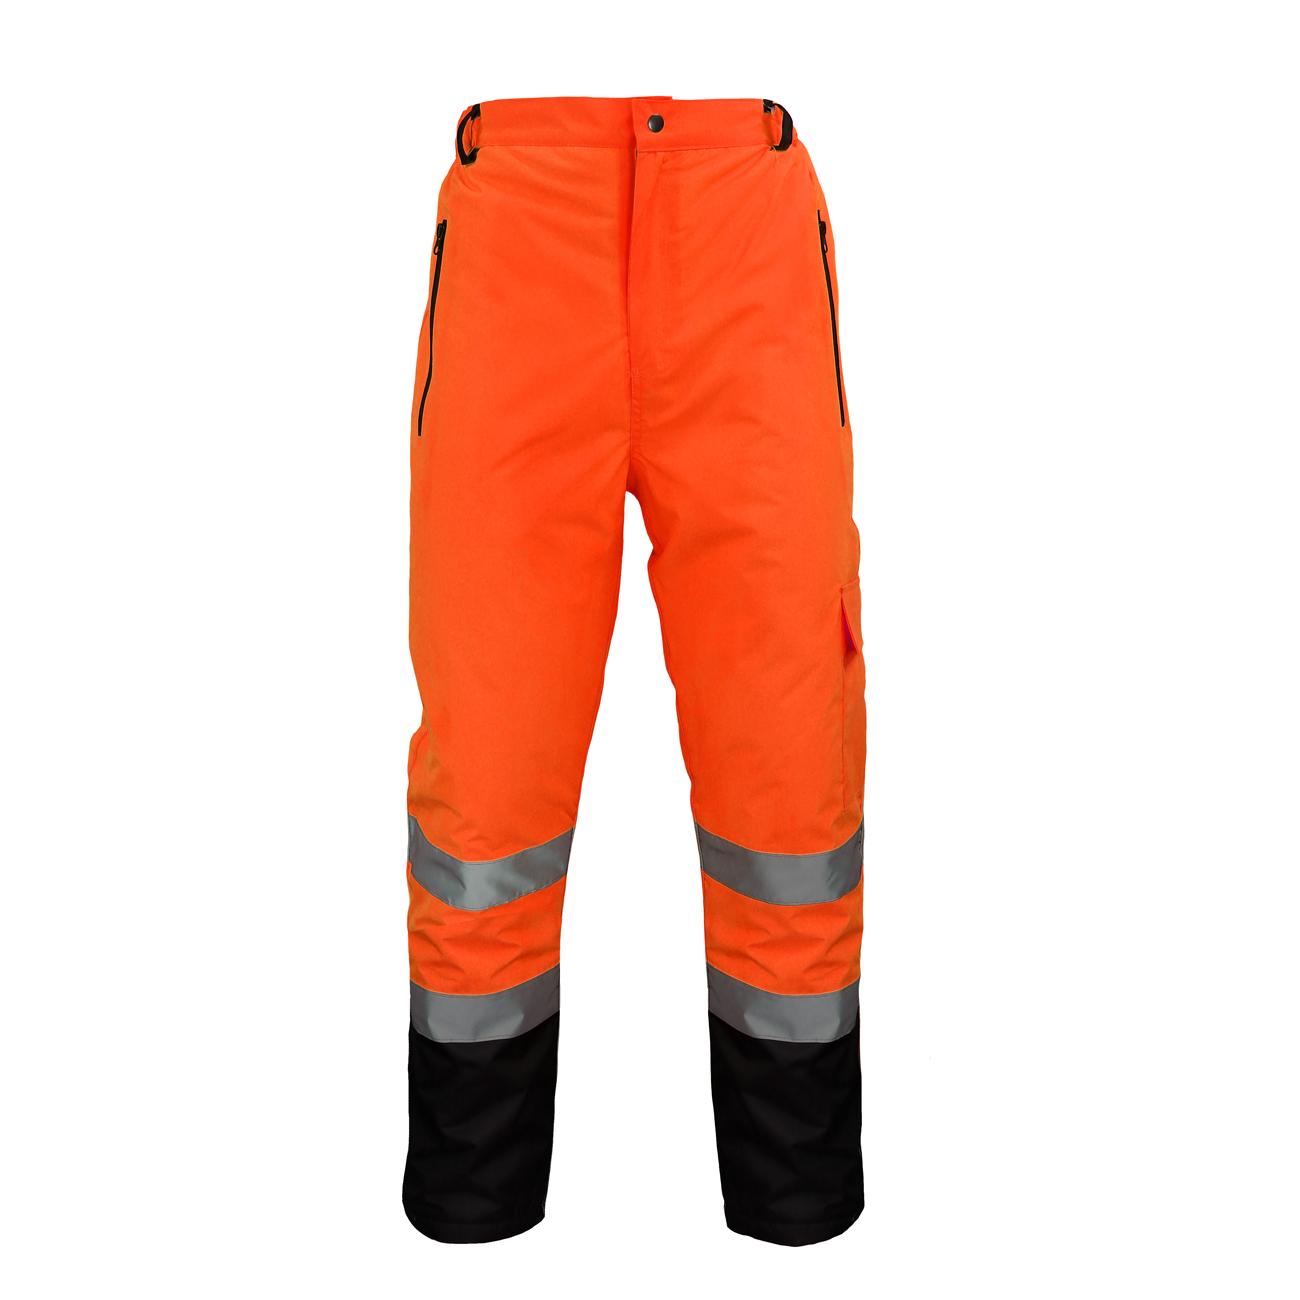 Pantalon Termico Activex Naranja Fluor C/Reflectante - Treck CL